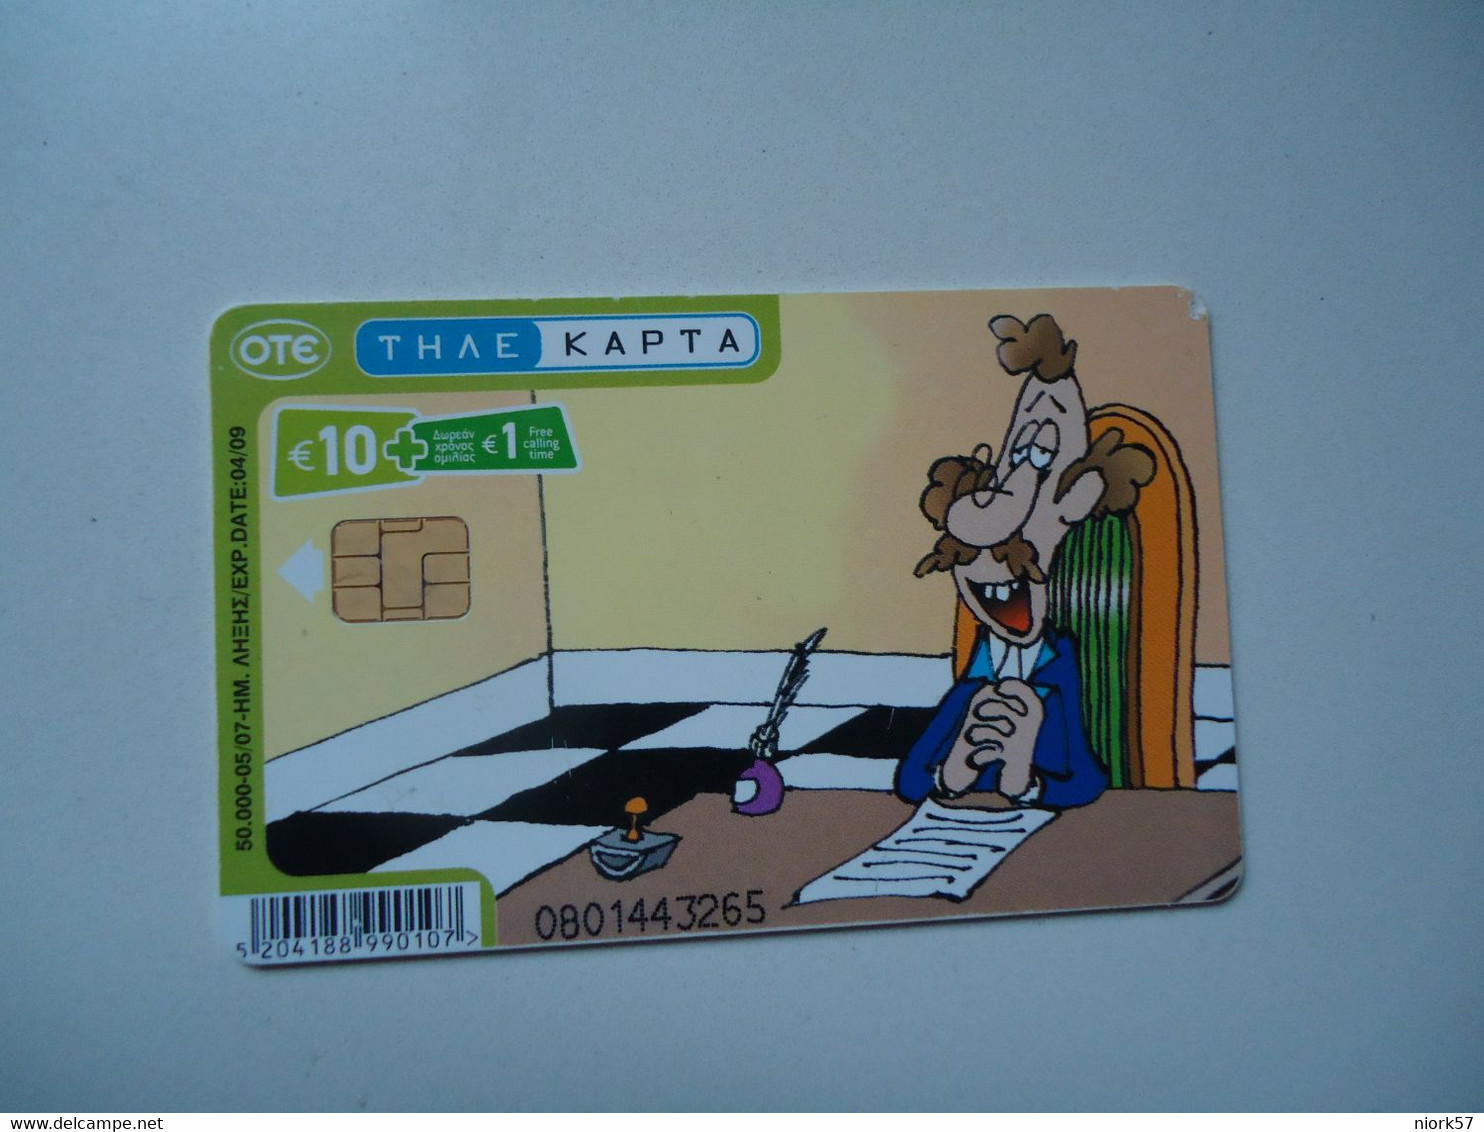 GREECE USED CARDS LOW TIRAGE 10 EYRO COMICS GRAHAM BELL TELEPHONES - Téléphones